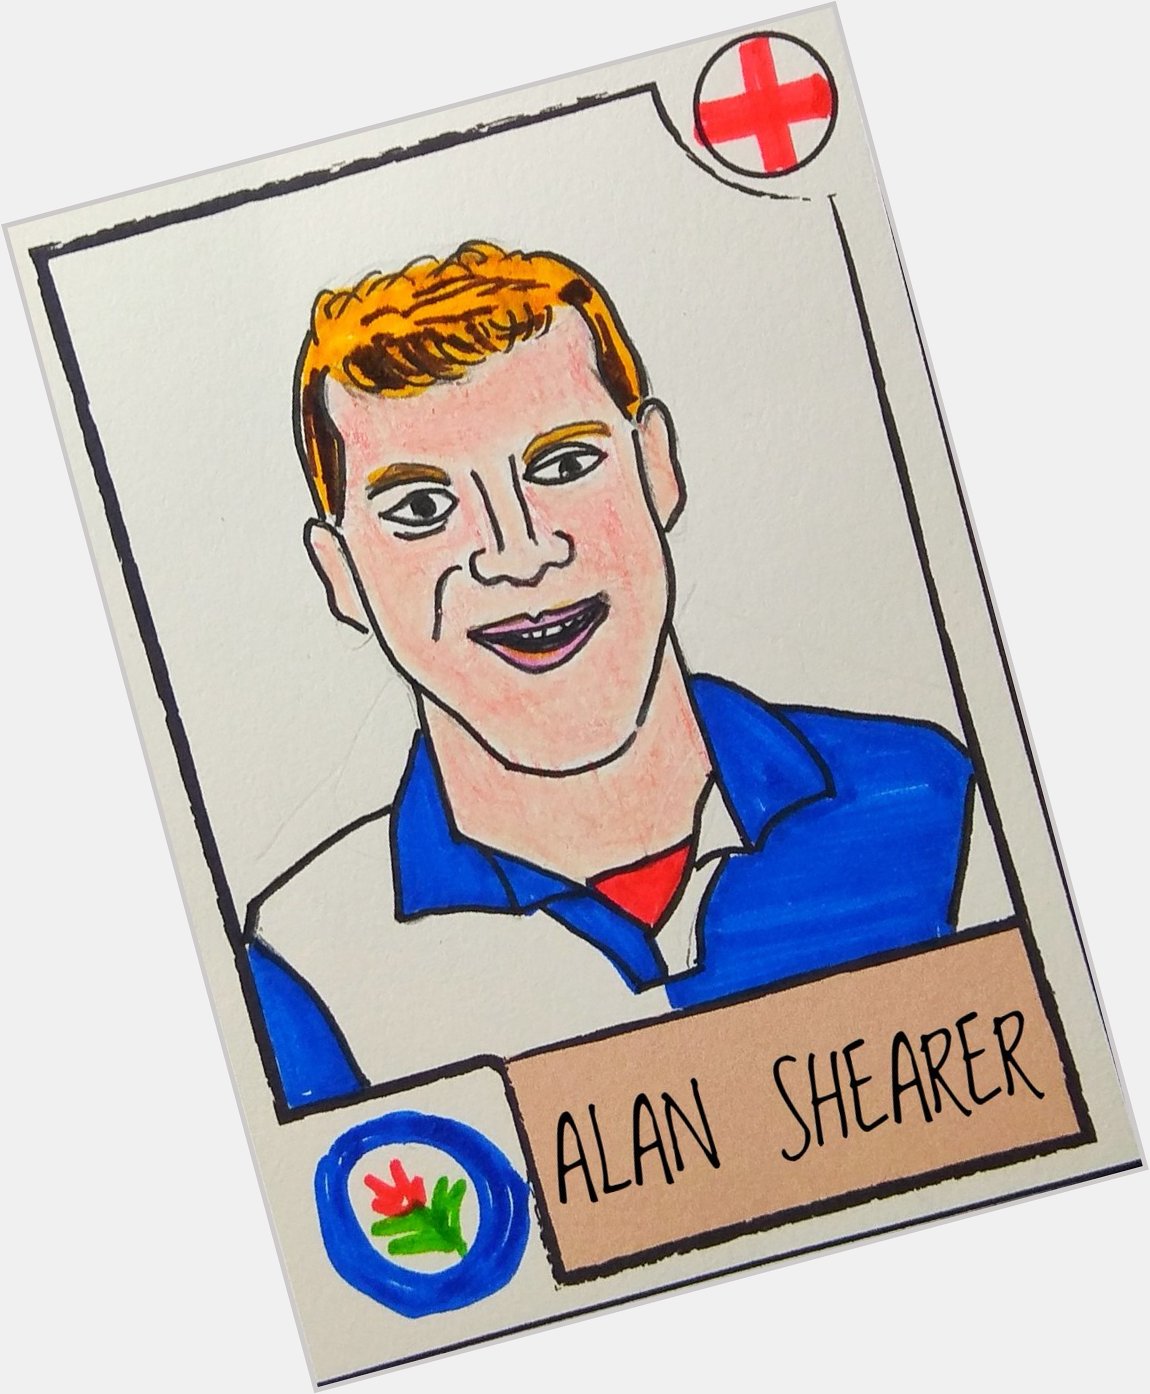 Happy birthday, Alan Shearer. 